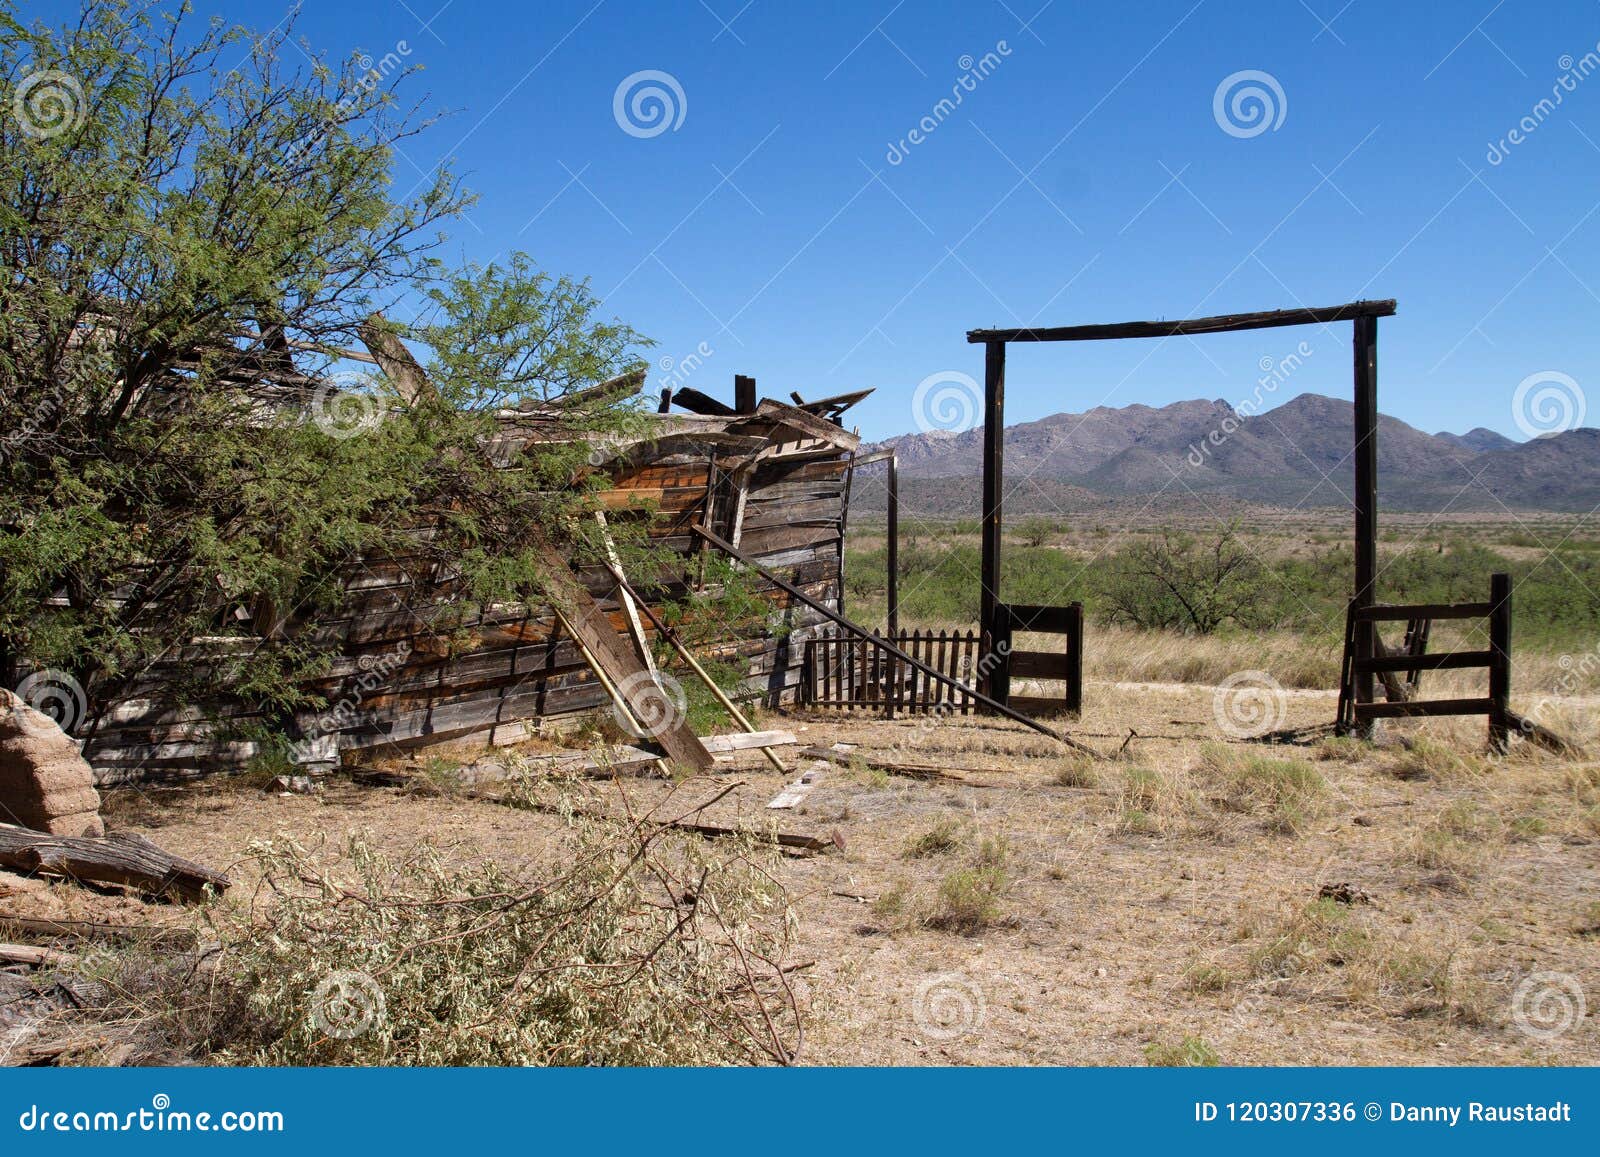 Old Wild West Town Movie Set In Mescal, Arizona Stock Photo - Image of landmark ...1300 x 957